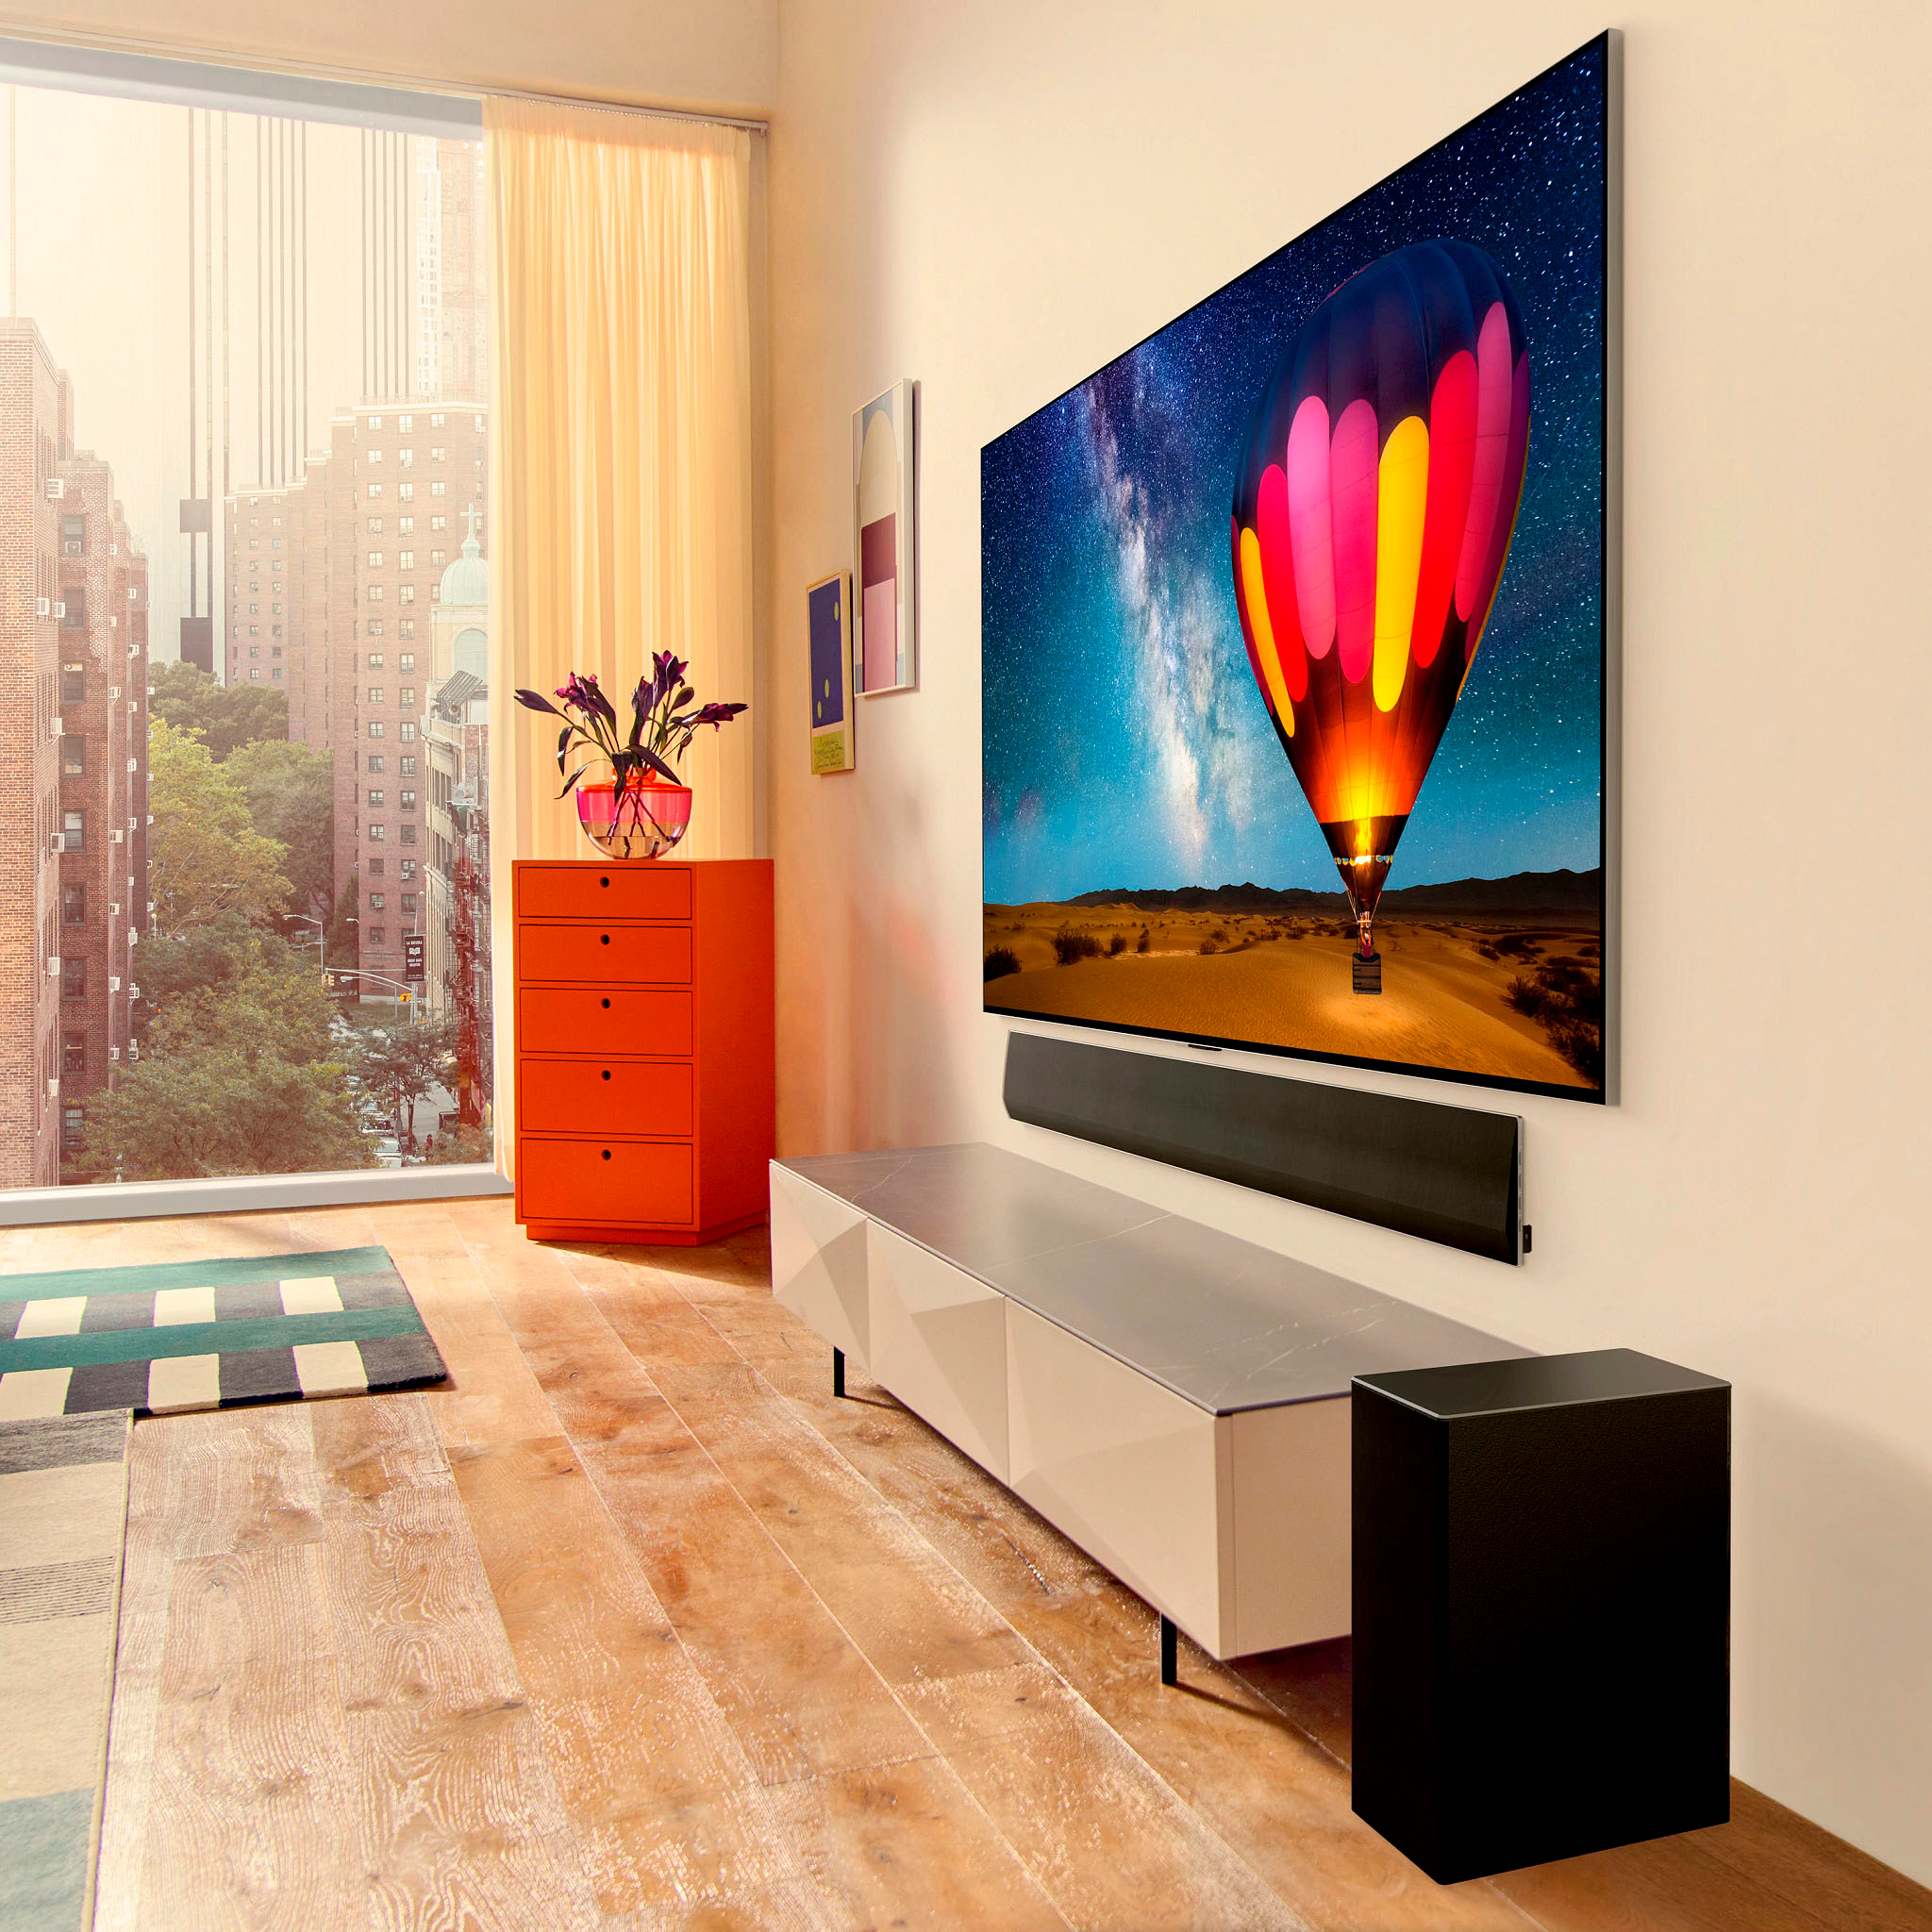 LG OLED55G36LA / Televisor Smart TV 55 120Hz OLED UHD 4K HDR